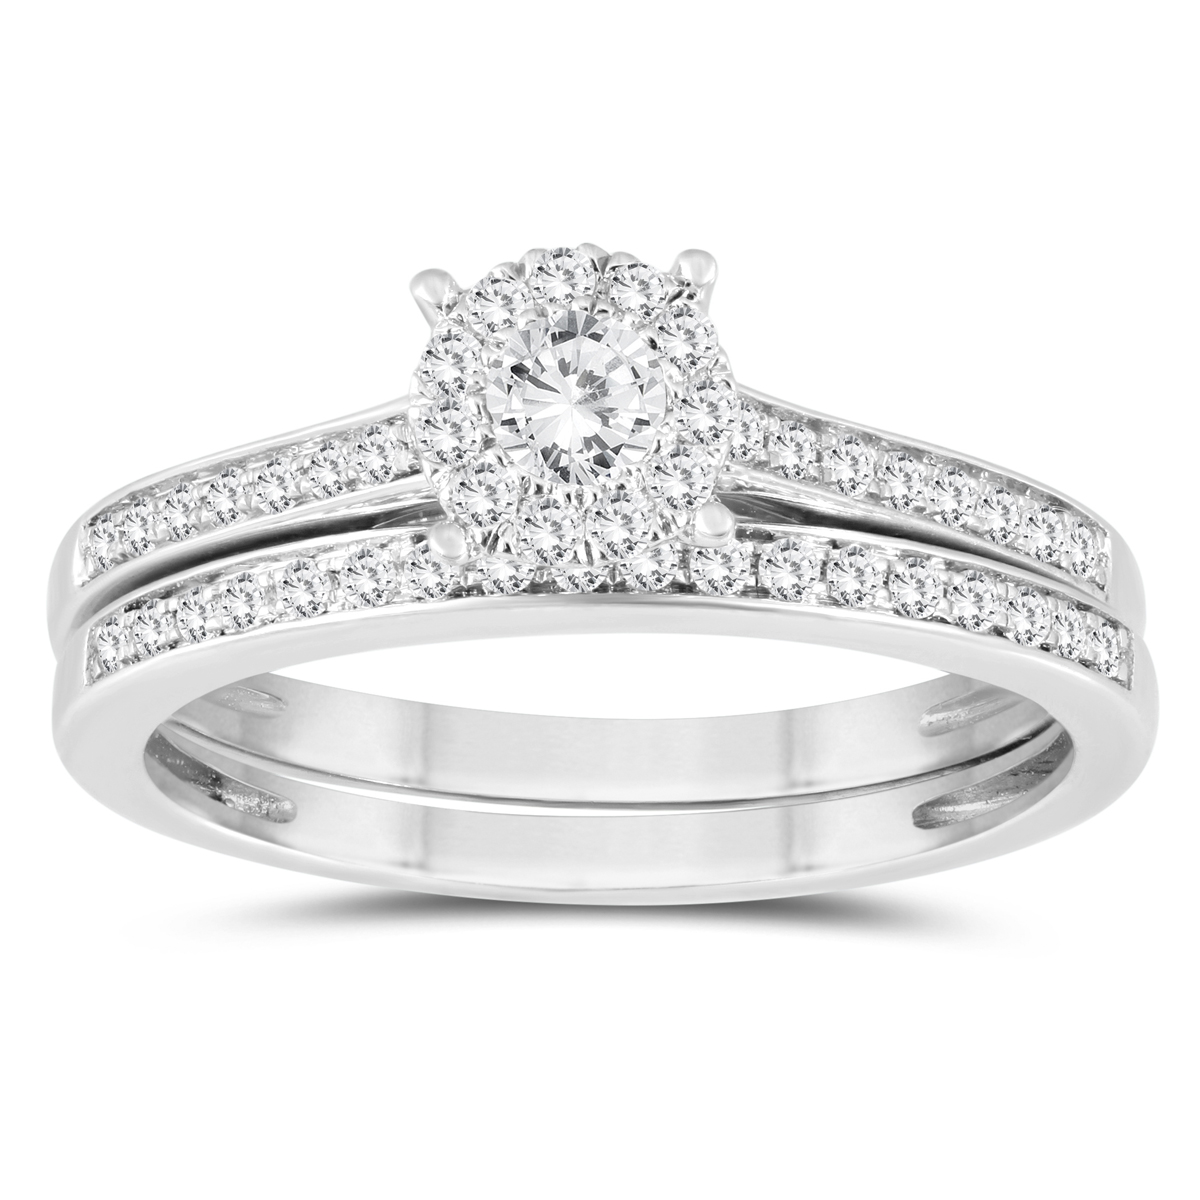 1/2 Carat TW Diamond Engagement Ring and Wedding Band Bridal Set in 10K White Gold